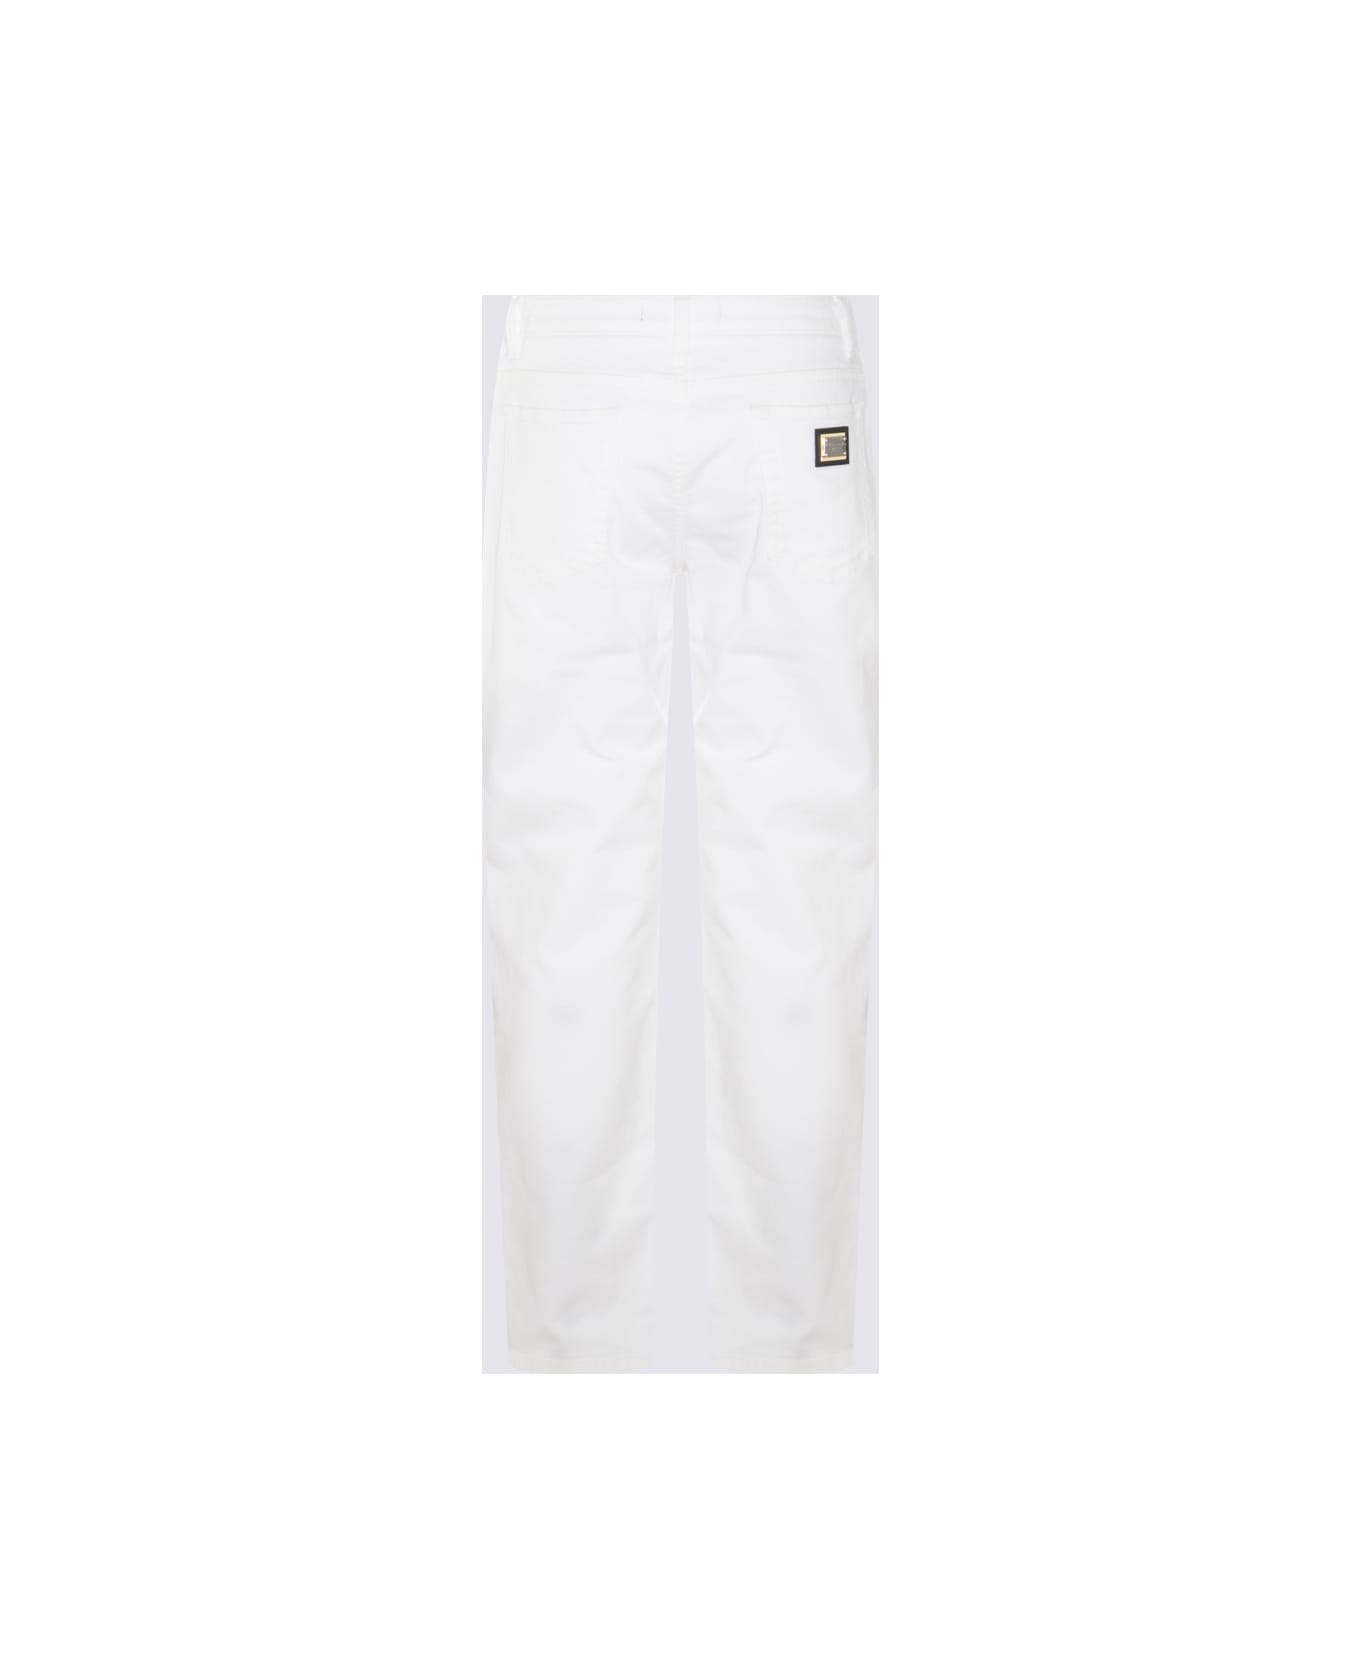 Dolce & Gabbana White Cotton Blend Jeans - White